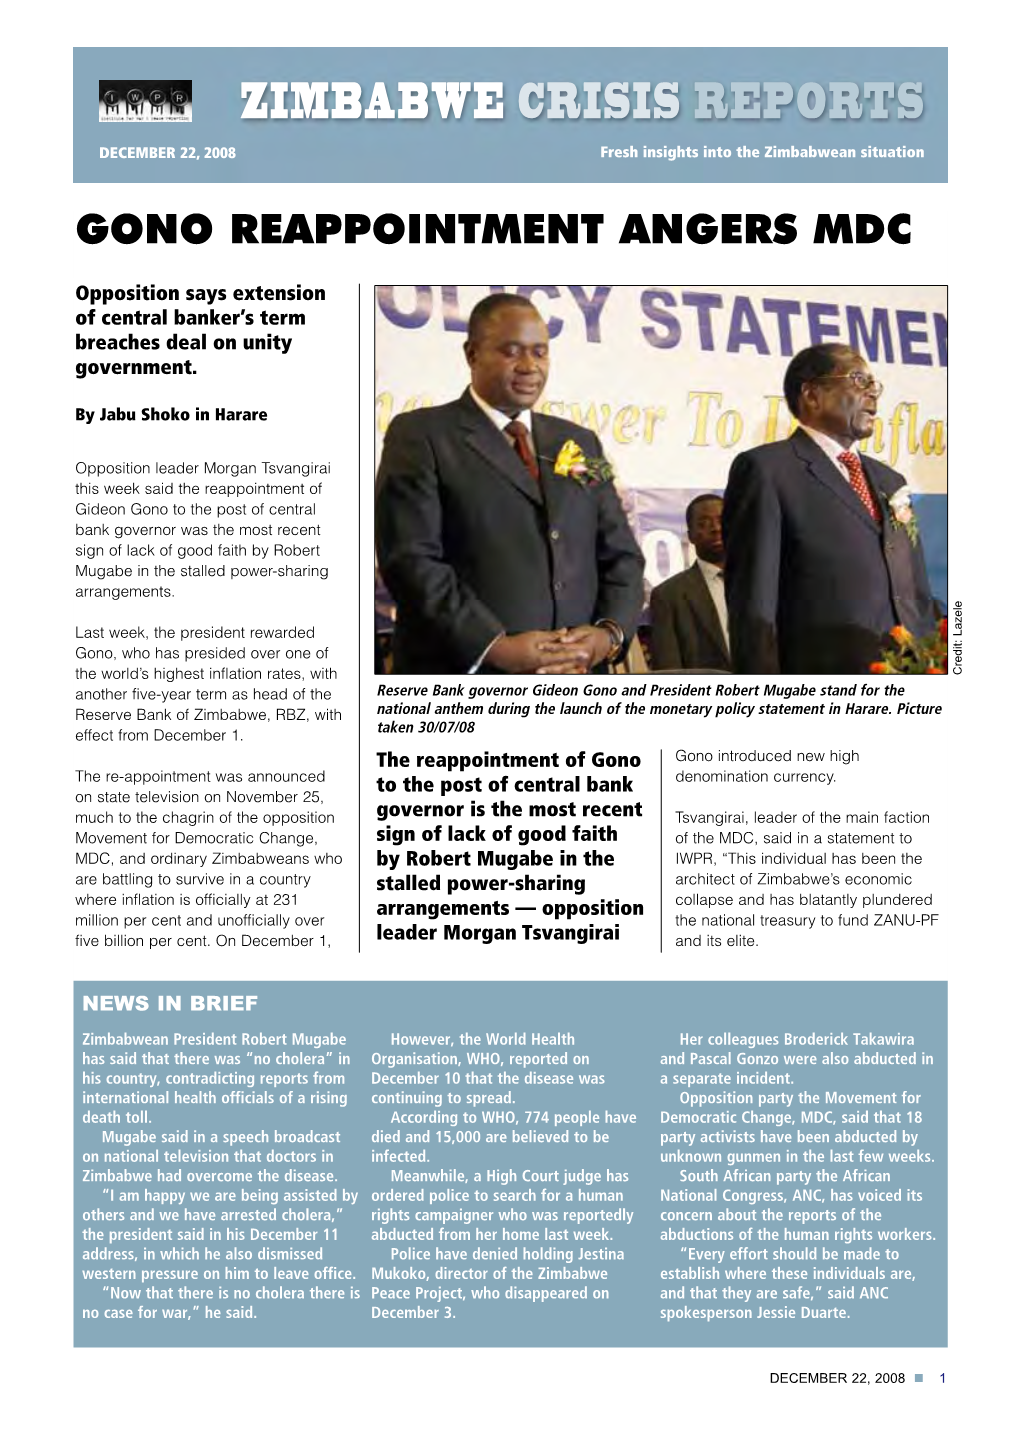 Zimbabwe Crisis Reports, Dec 22 08